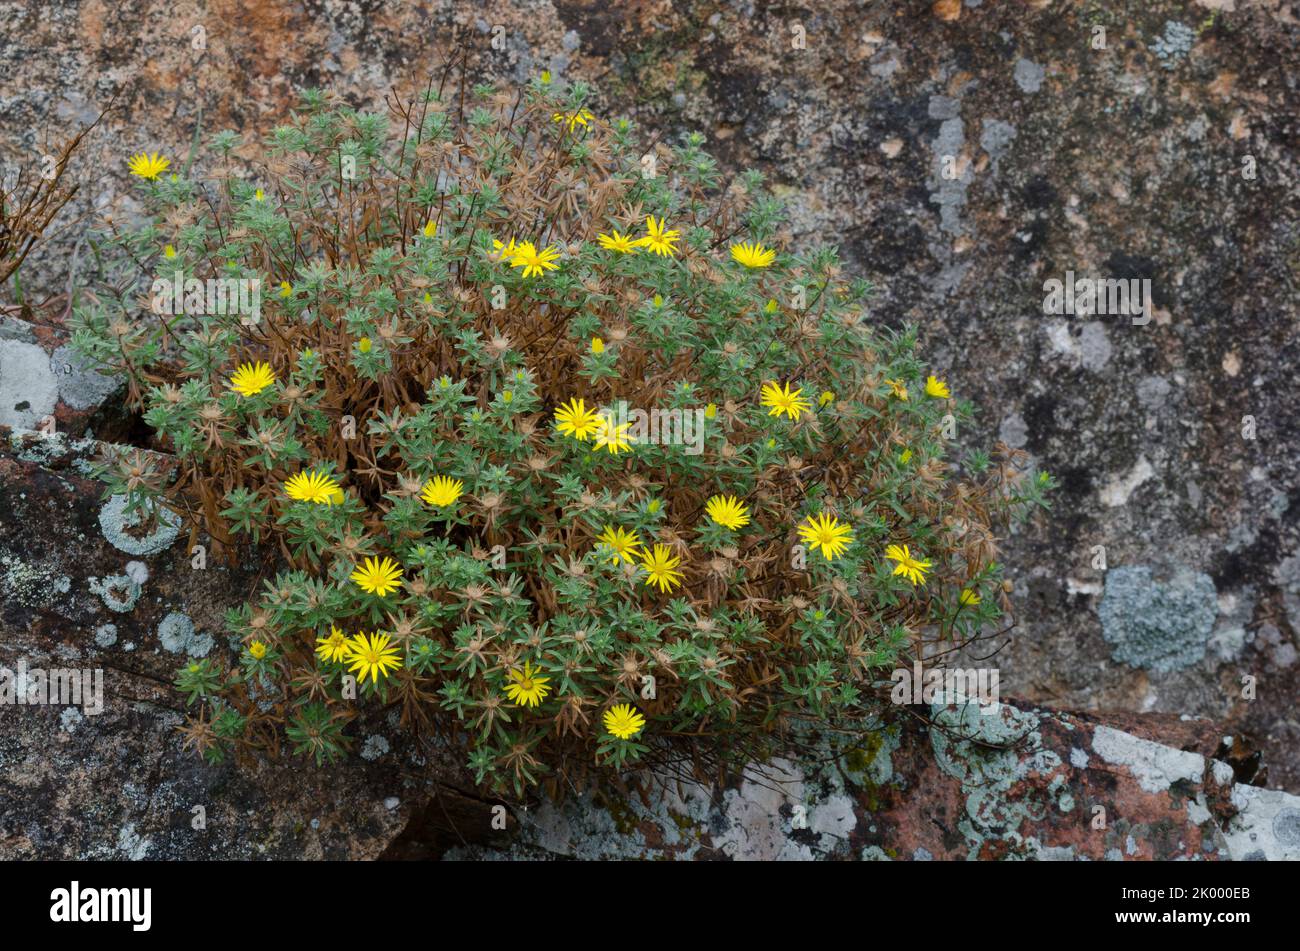 Stiffleaf False Goldenaster, Heterotheca stenophylla, growing among Lichen Covered Rocks, Acarospora contigua (yellow), Xanthoparmelia sp. (gray) Stock Photo